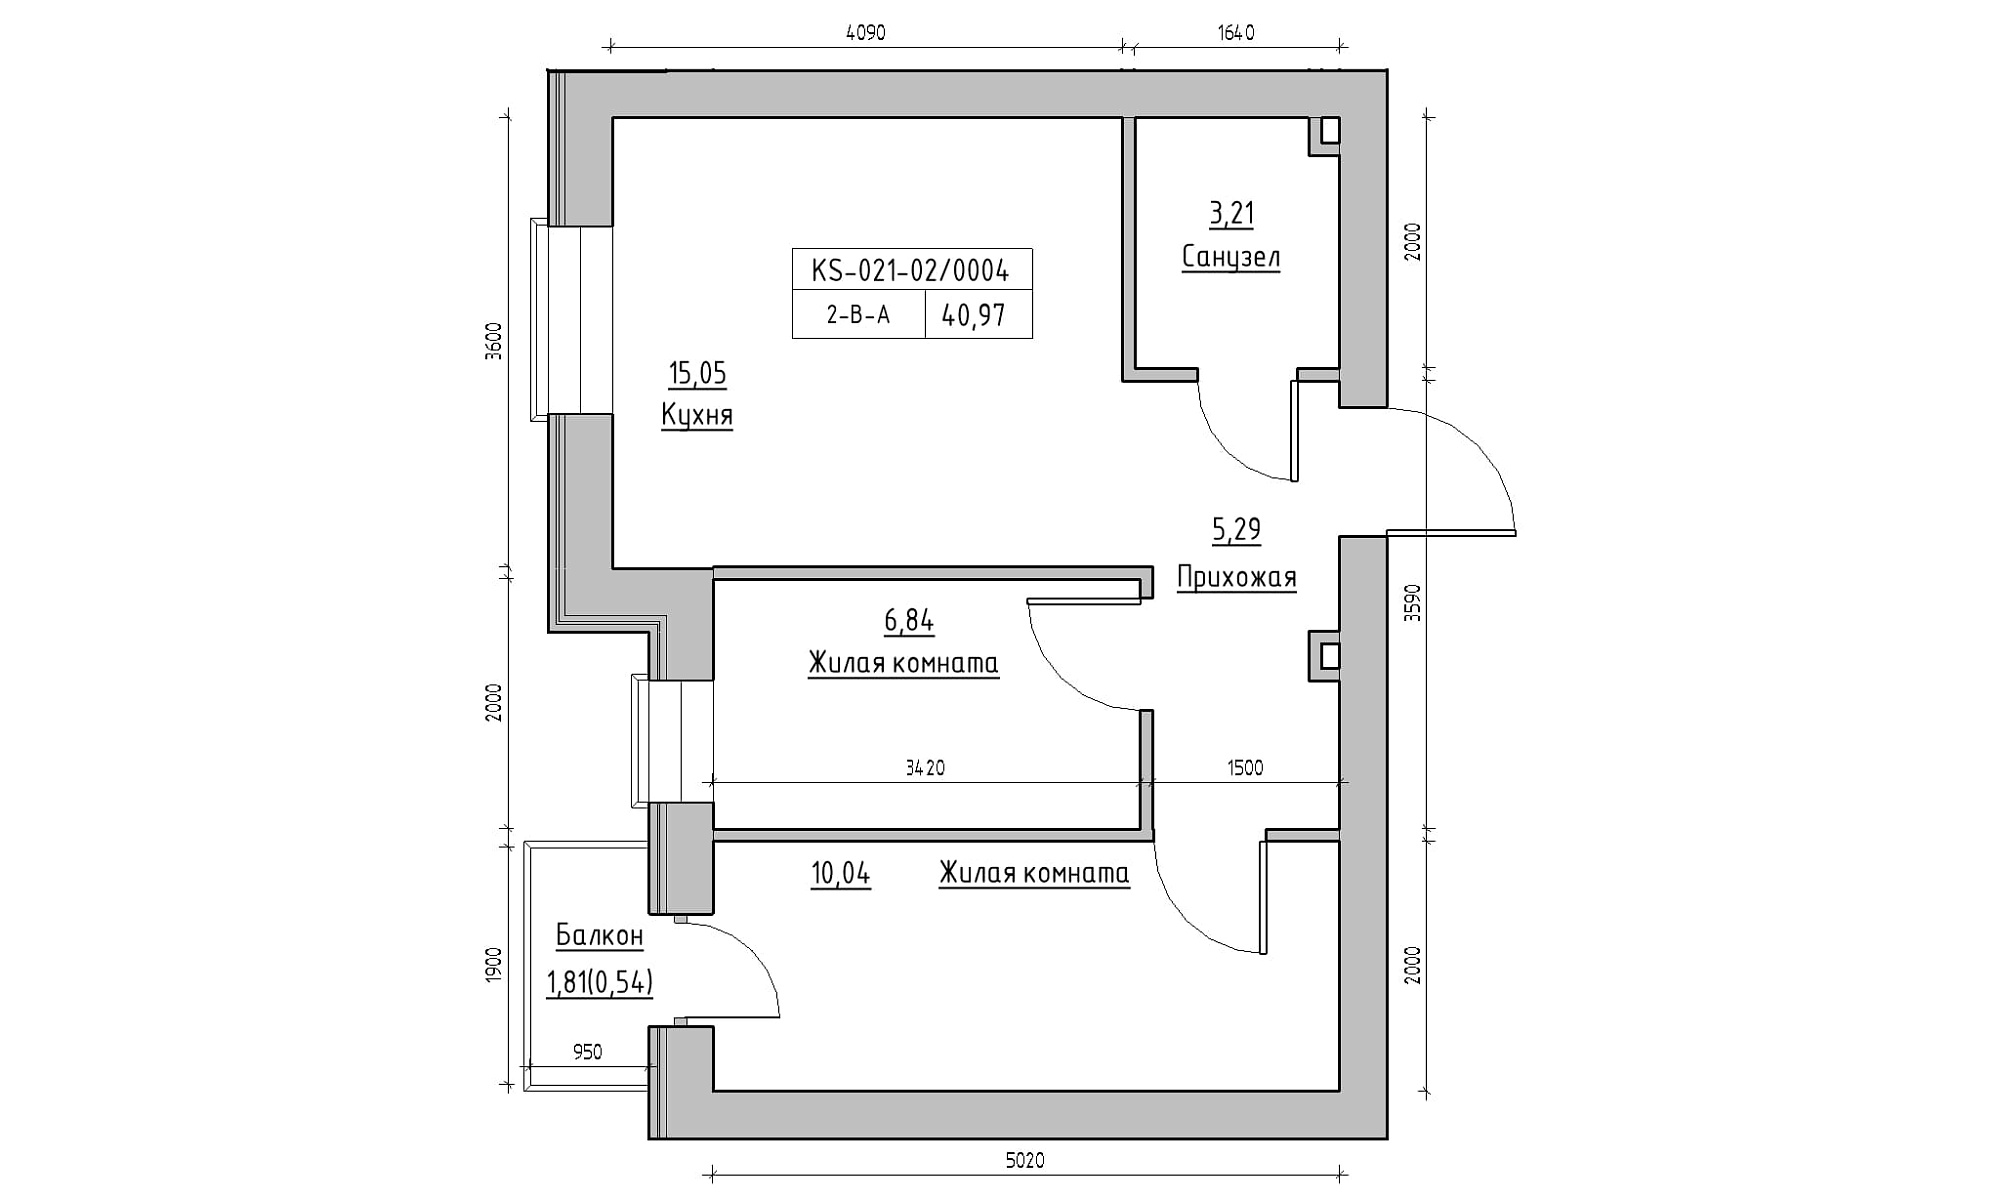 Planning 2-rm flats area 40.97m2, KS-021-02/0004.